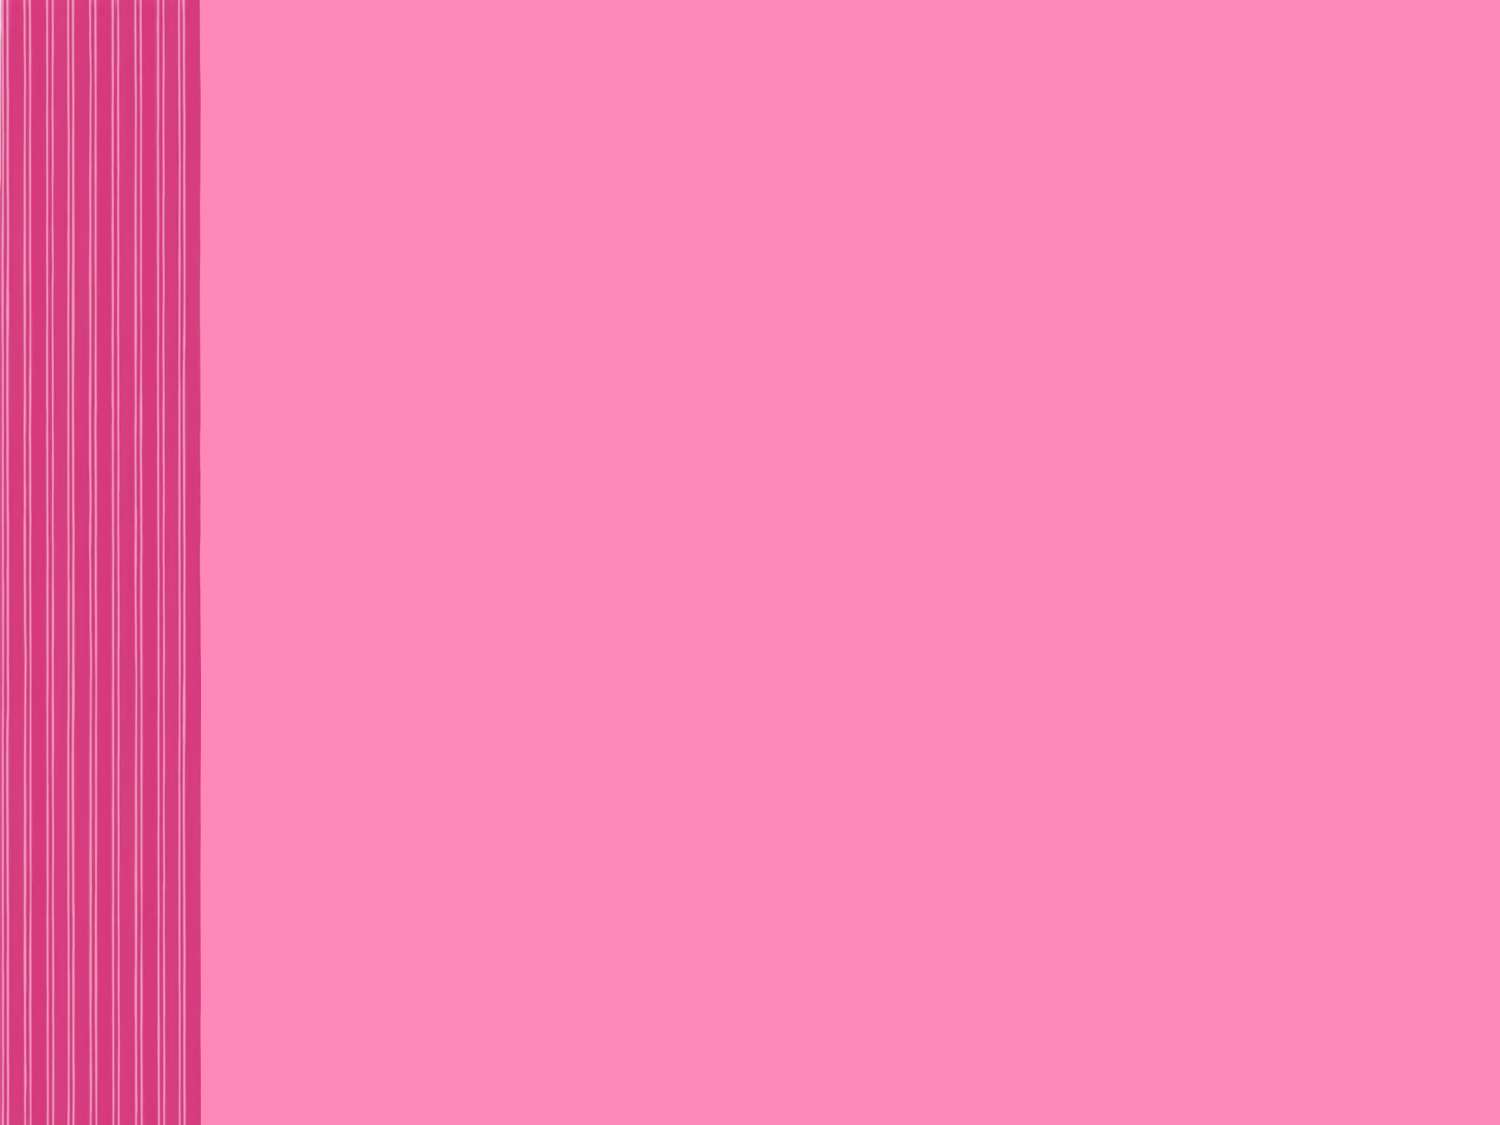 Multi Stripe Side Bar Pink Free PPT Background